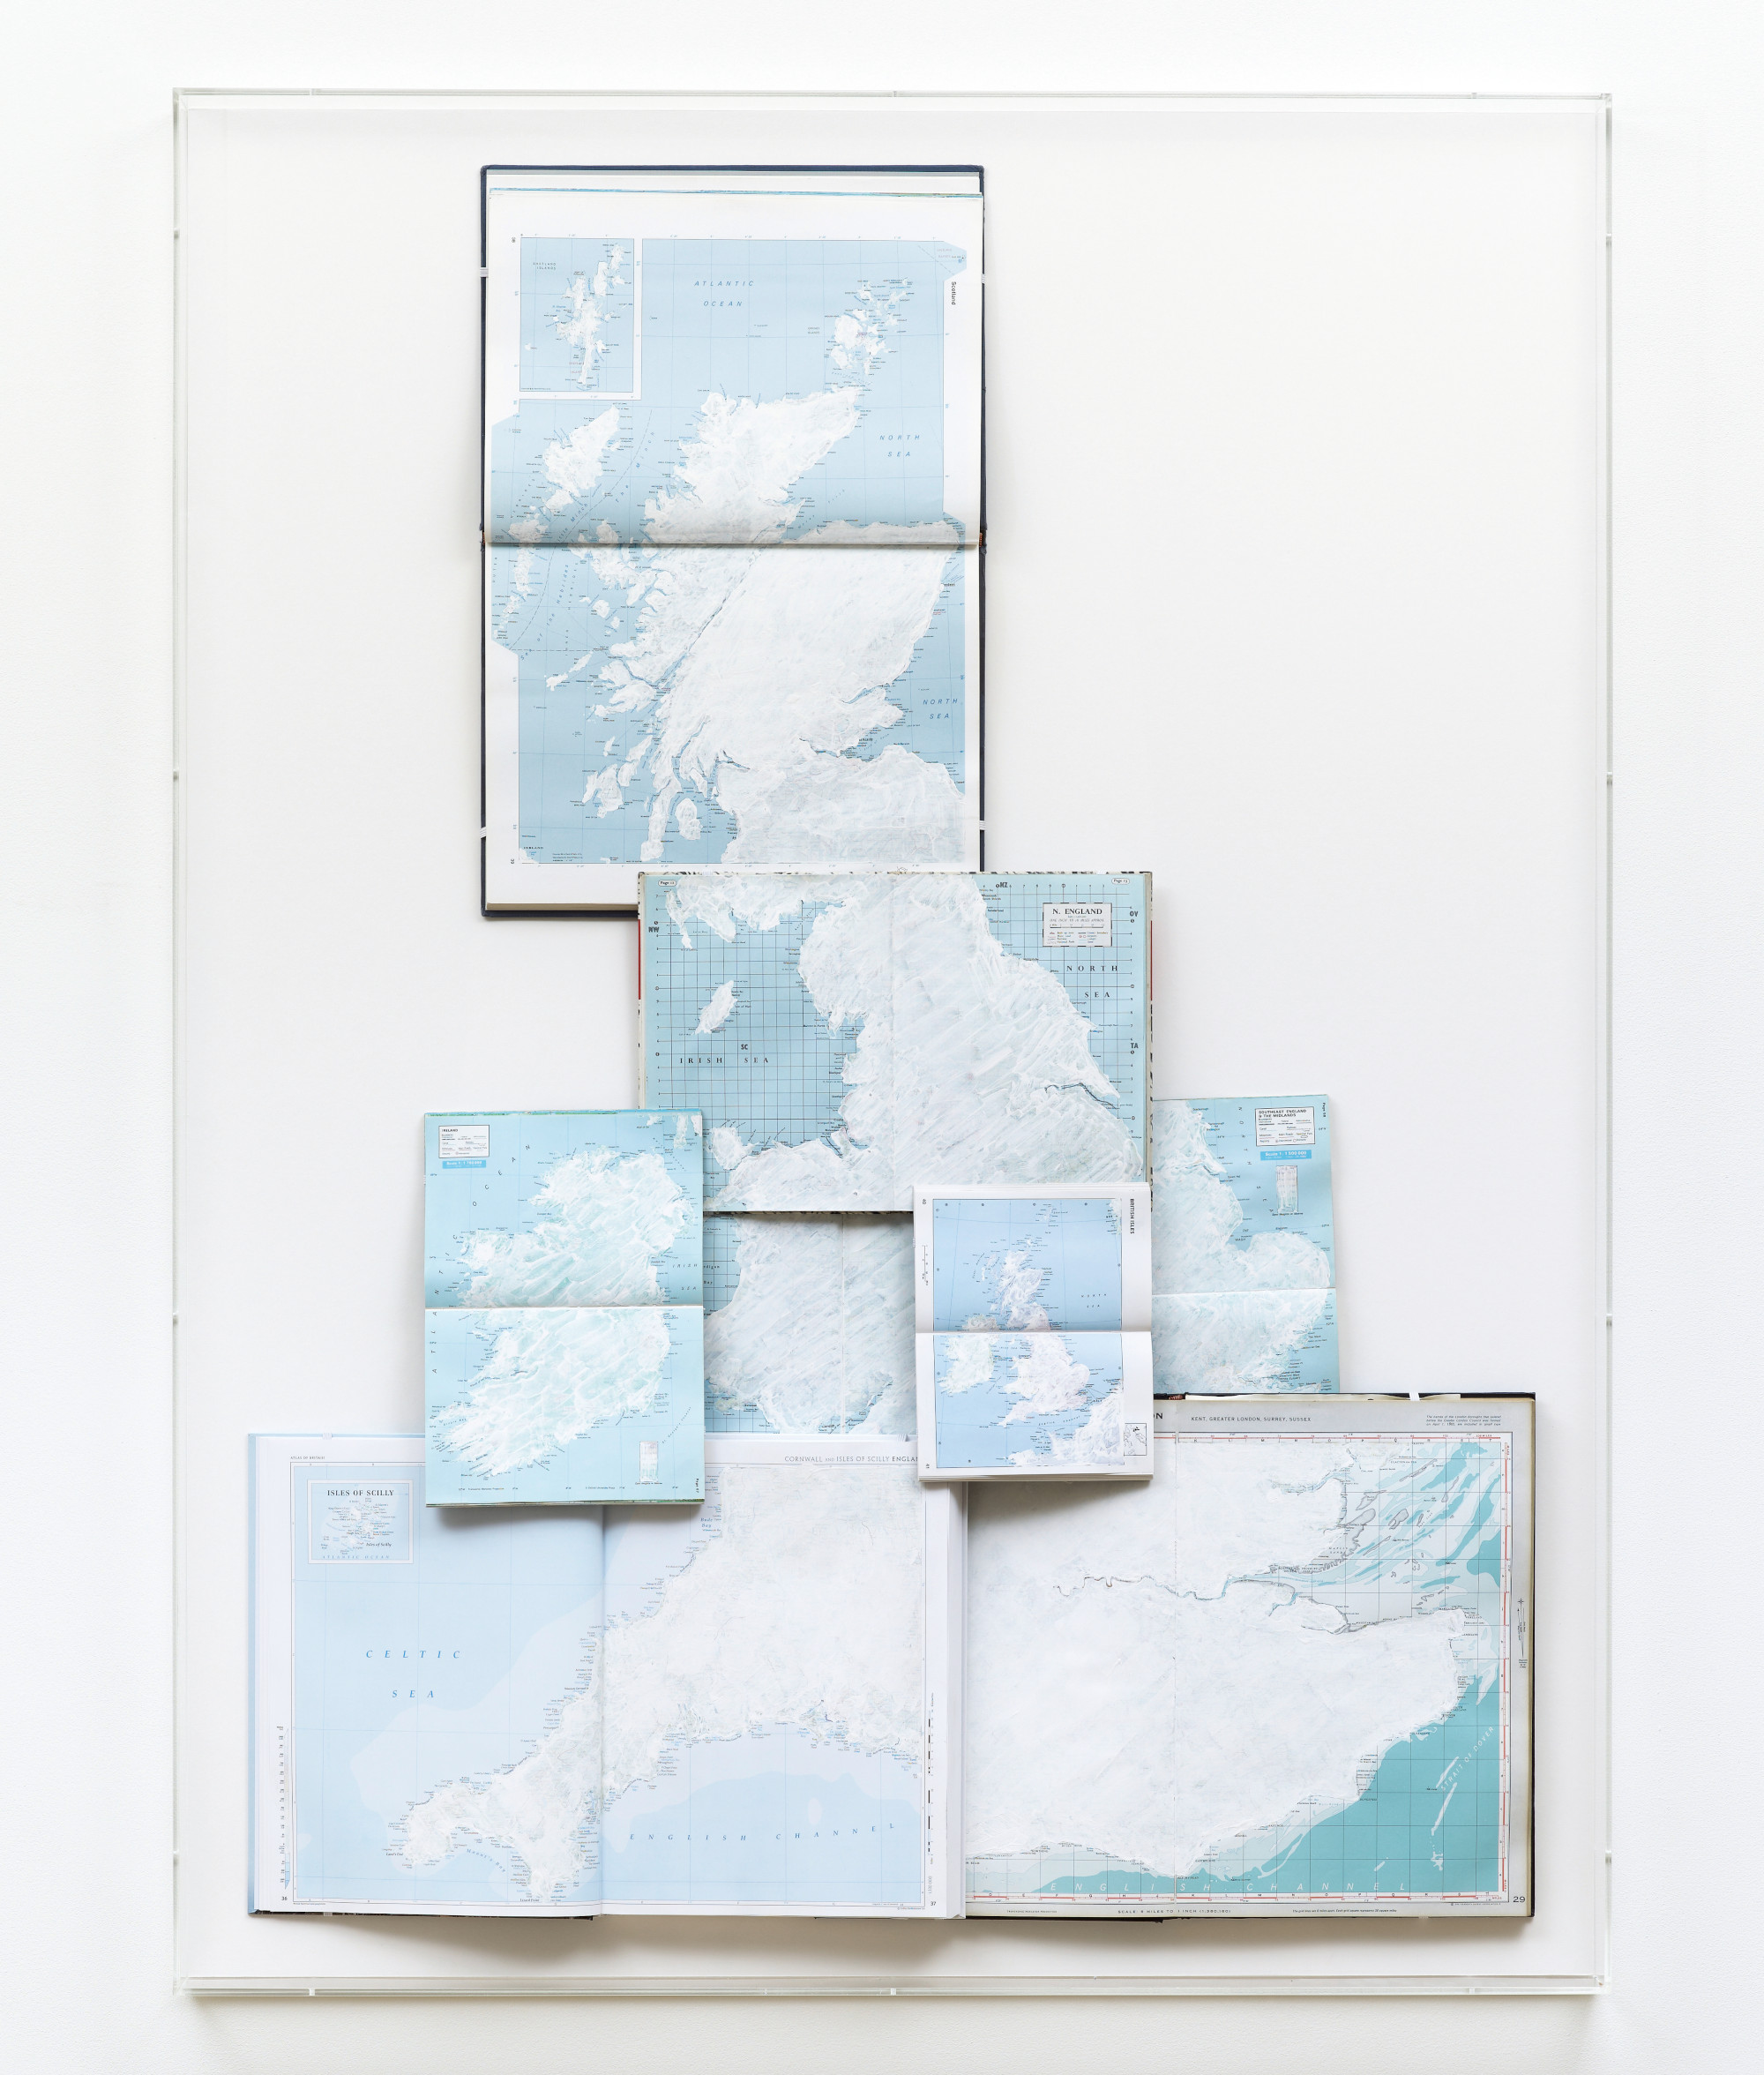 Only Blue (UK), 2015 by Tania Kovats